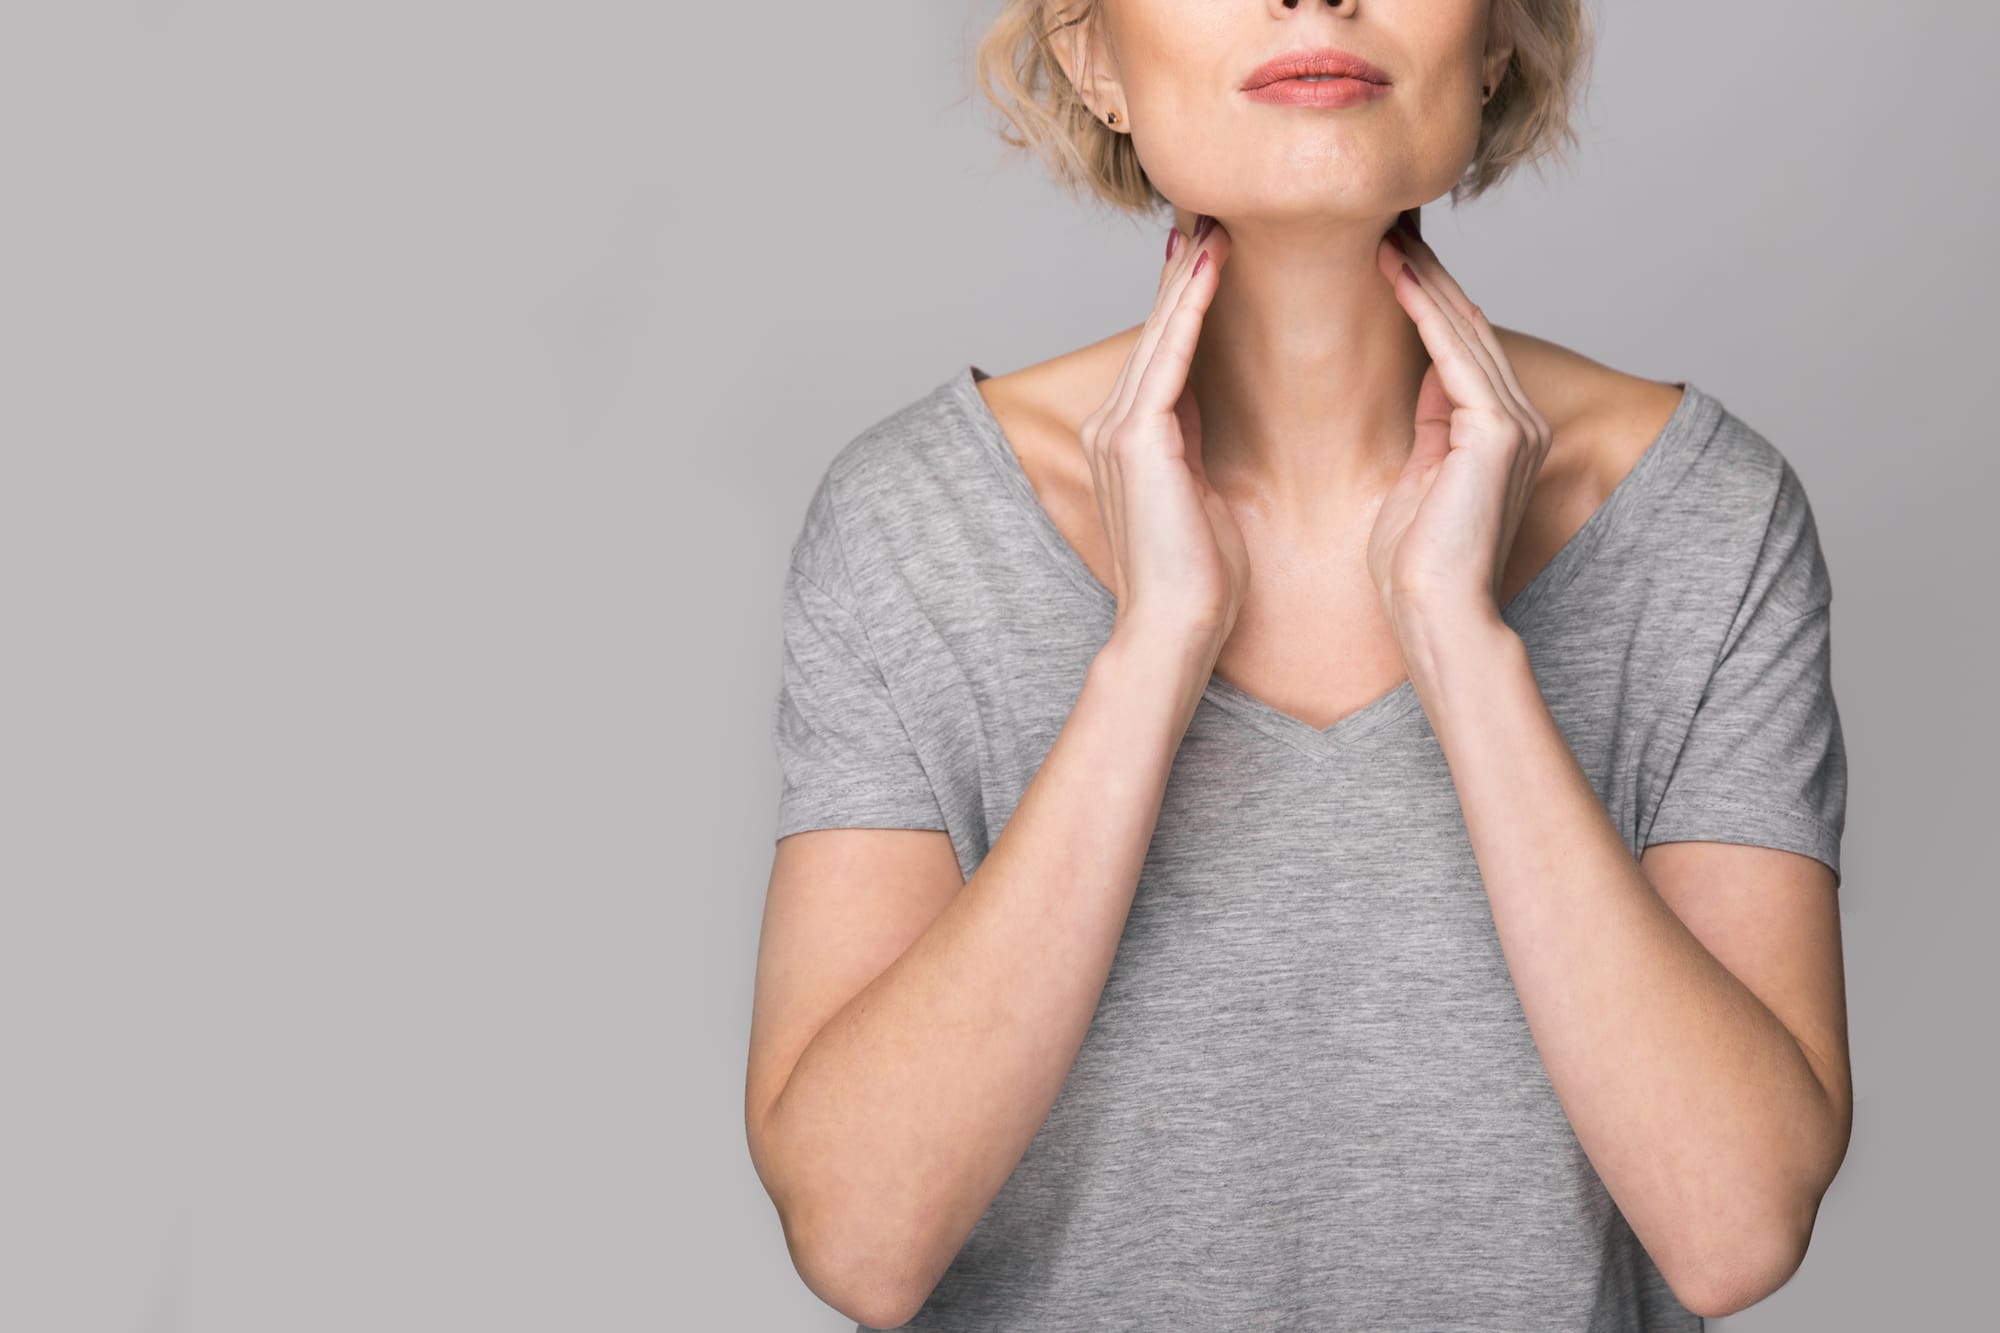 How do you get thyroid cancer?